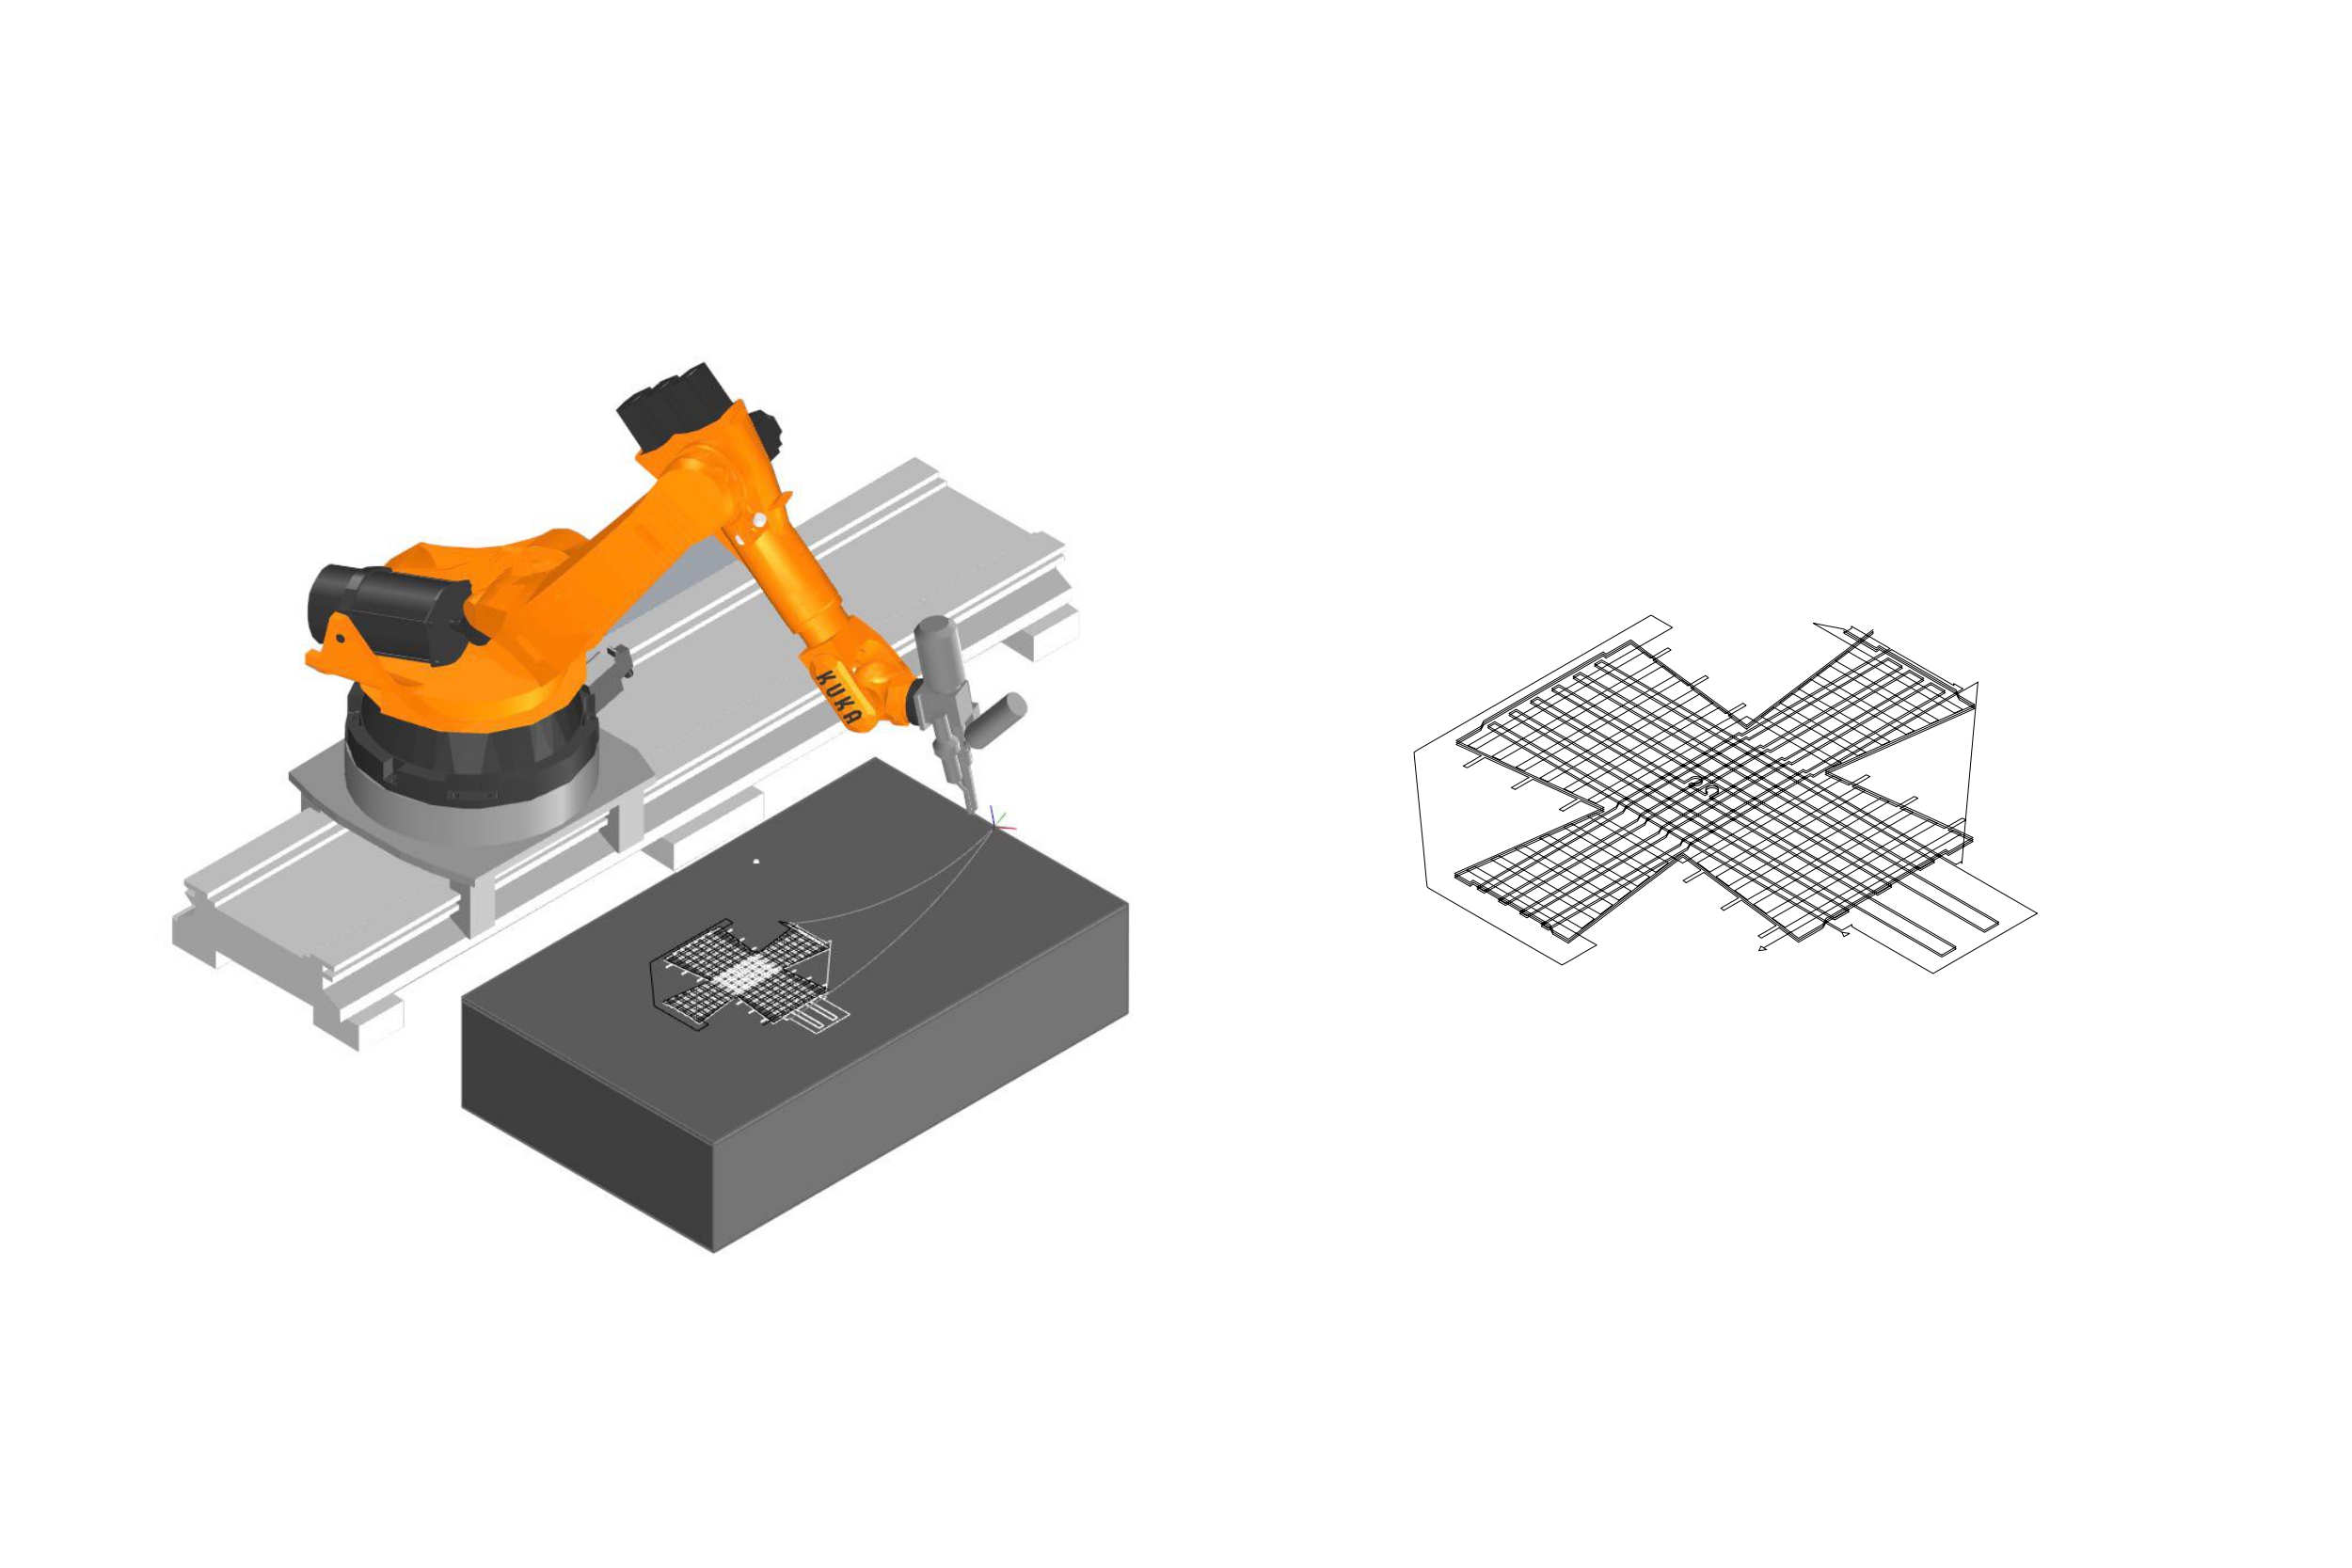 A virtual render of a 3D printing robotic arm.